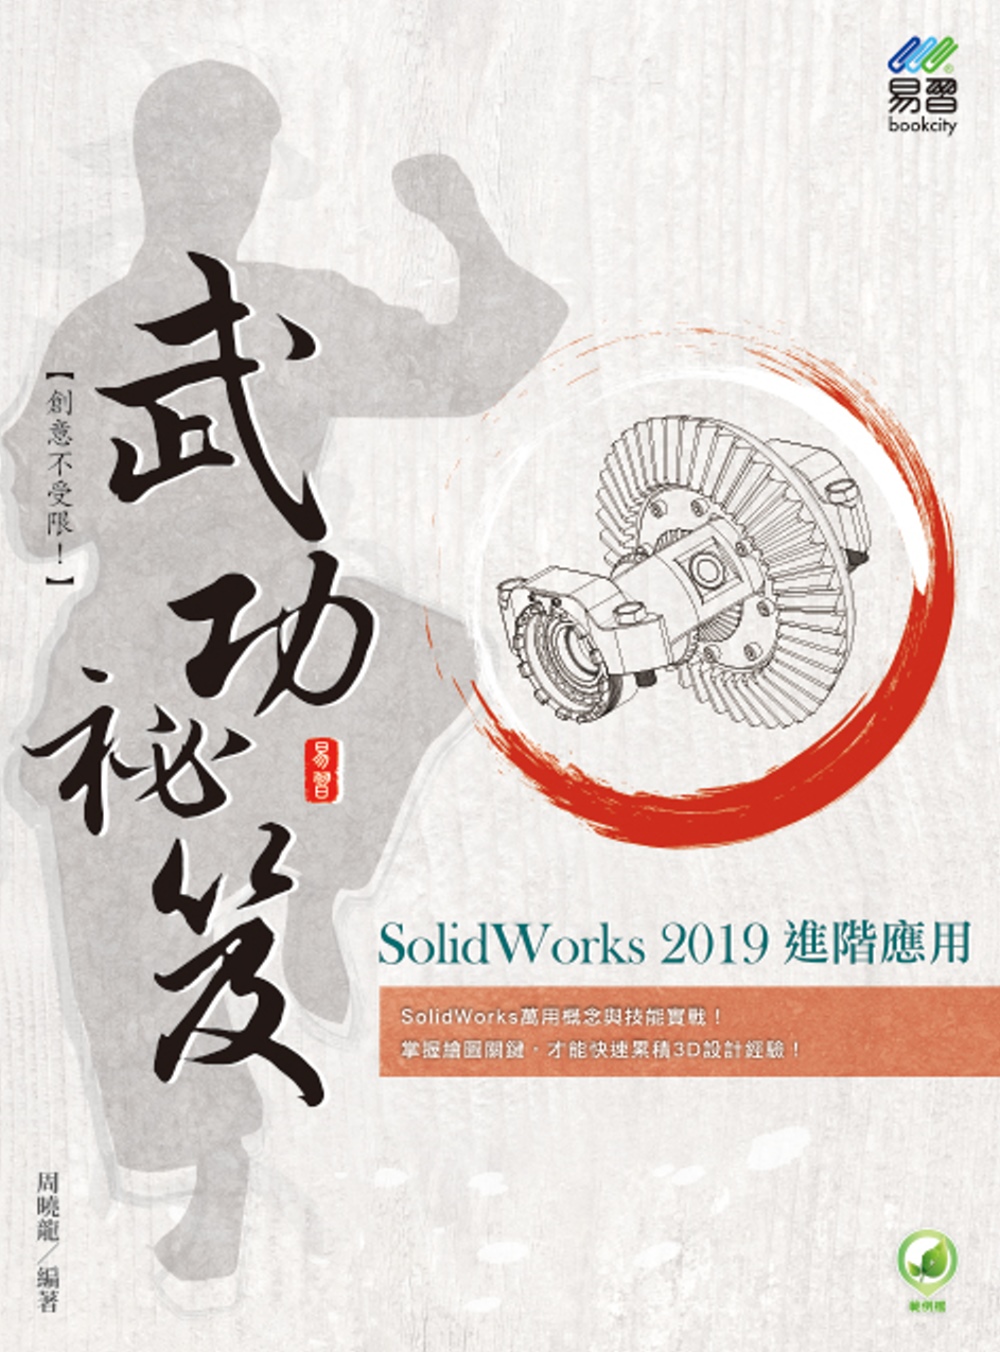 SolidWorks 2019 進階應用 武功祕笈